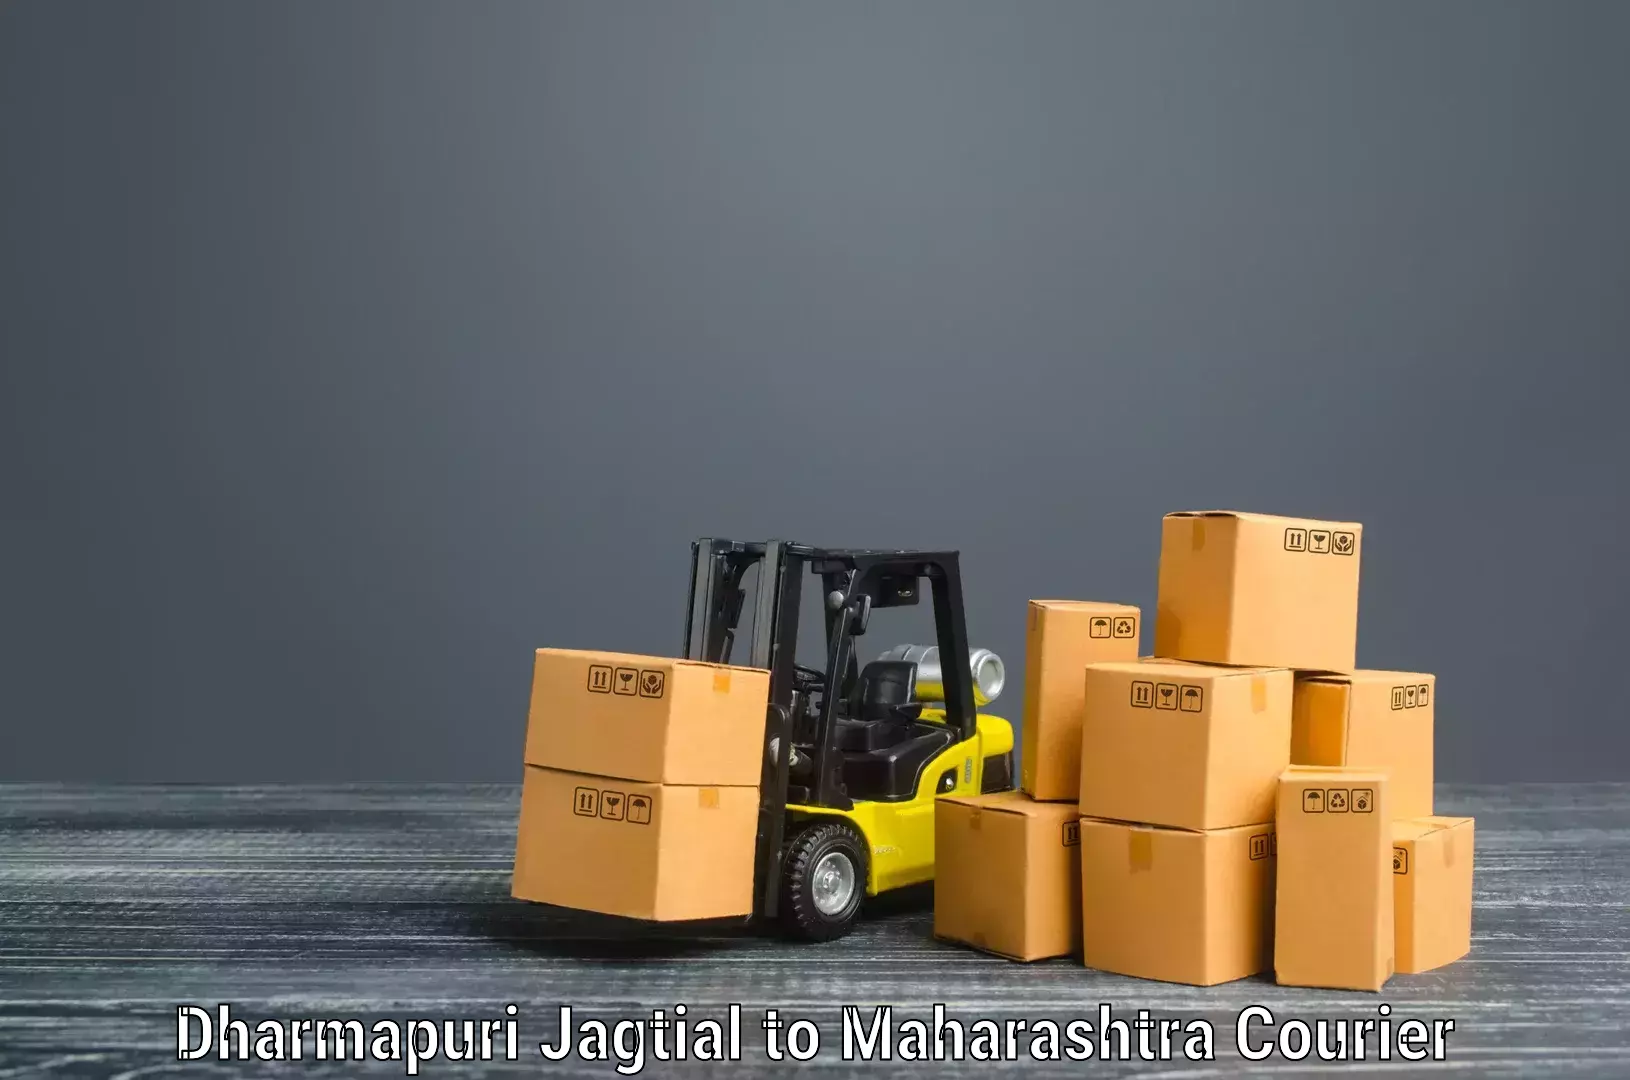 Moving and packing experts Dharmapuri Jagtial to Amravati